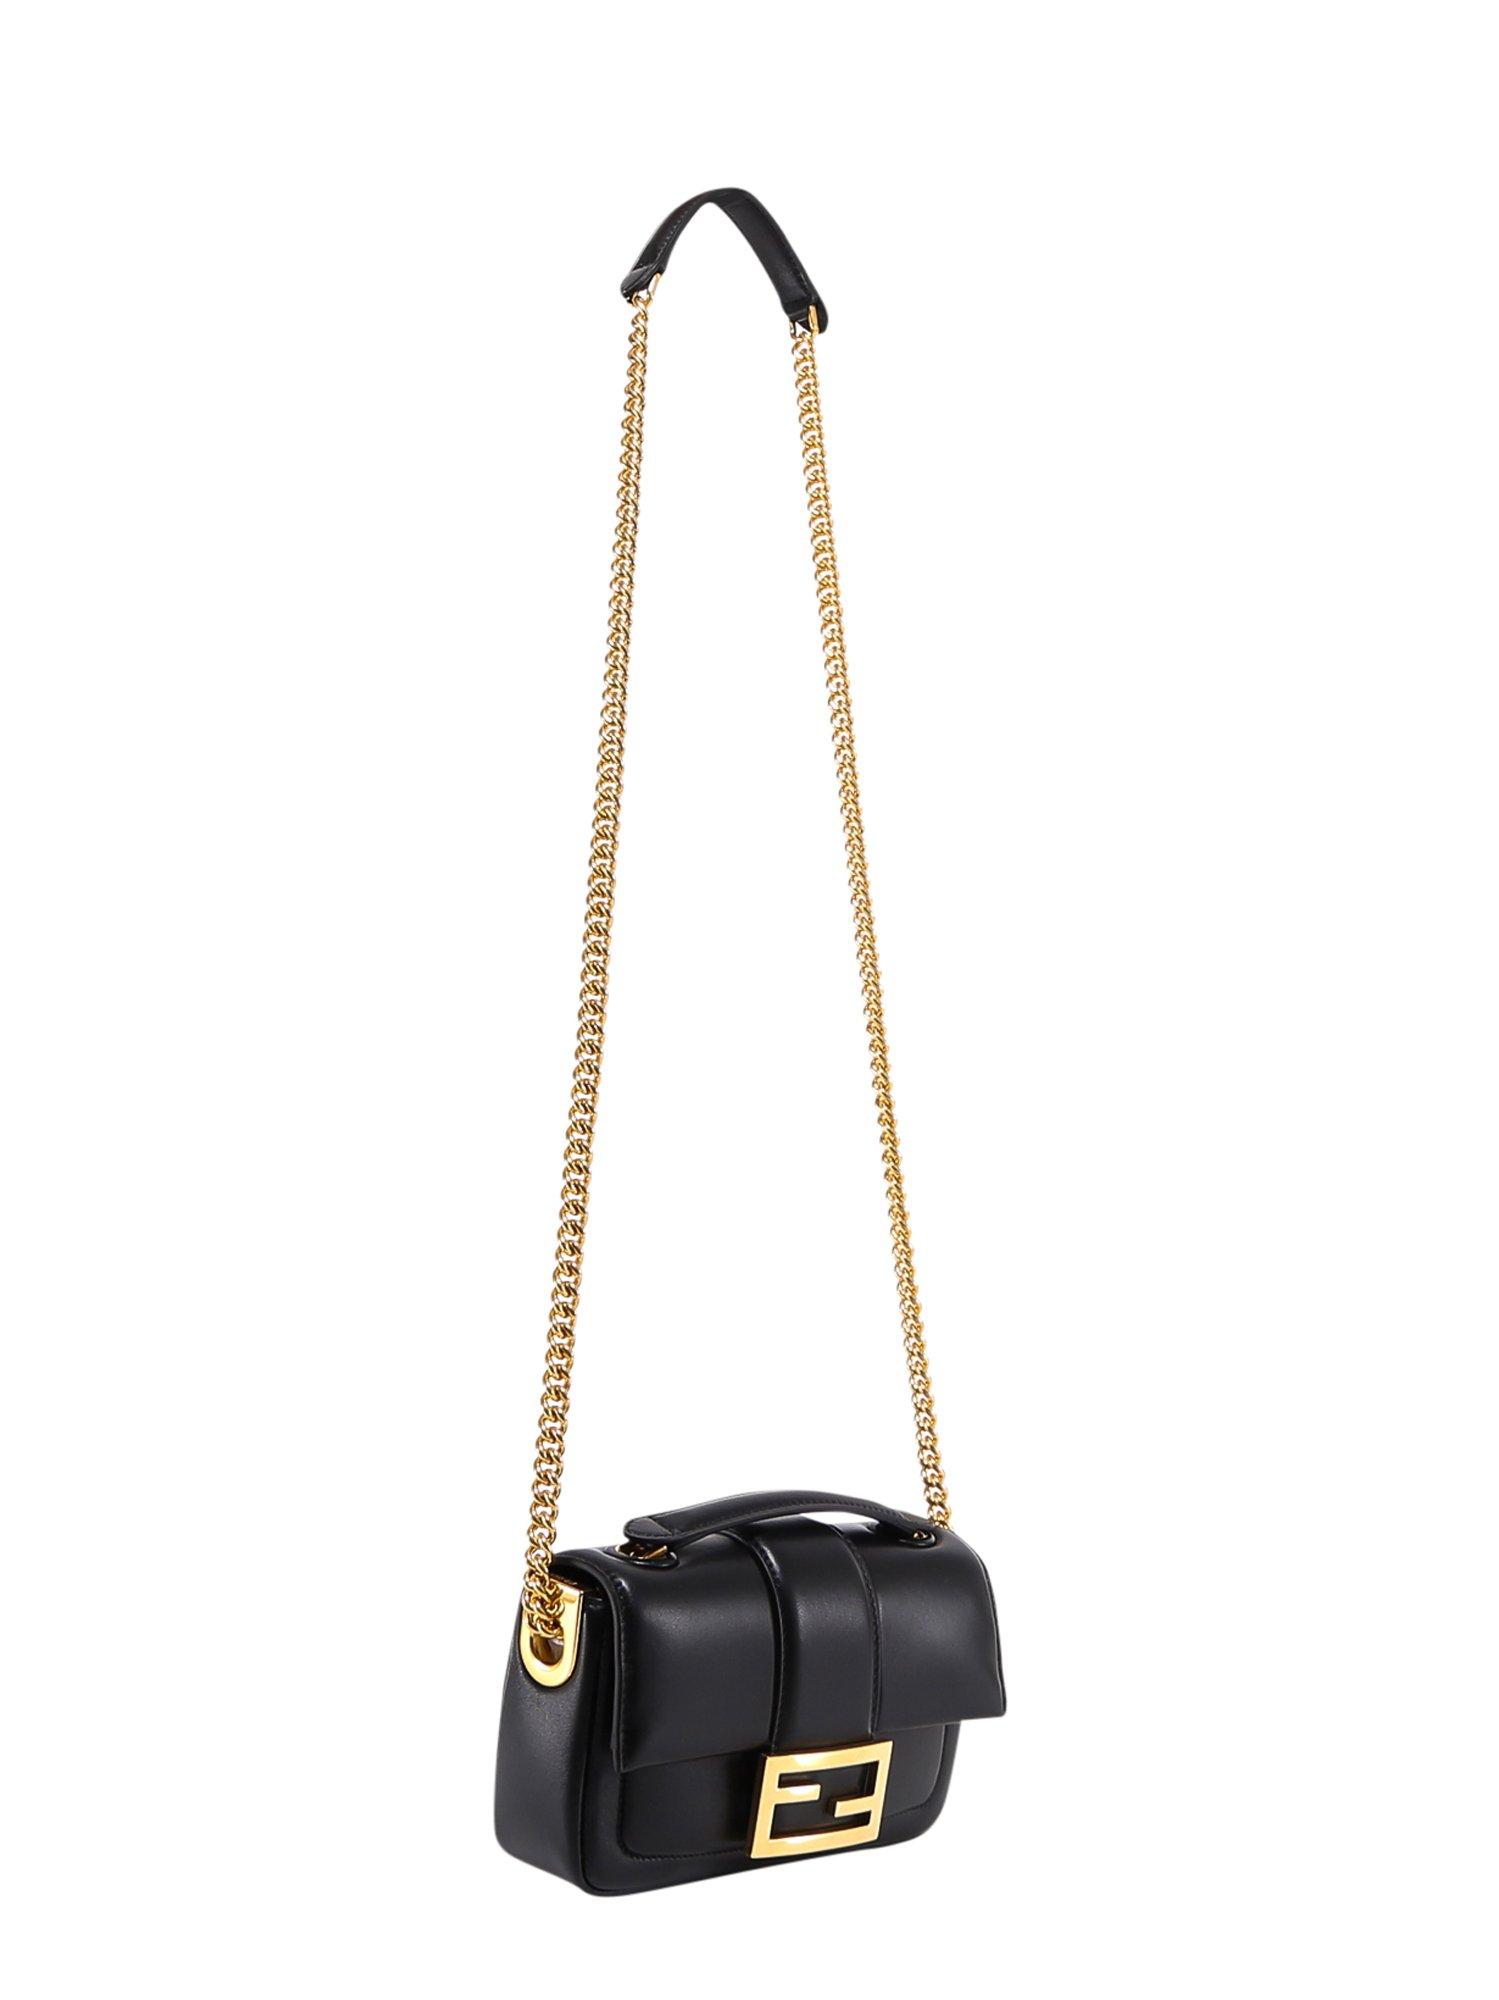 Fendi Leather Baguette Mini Chain Shoulder Bag in Black - Lyst